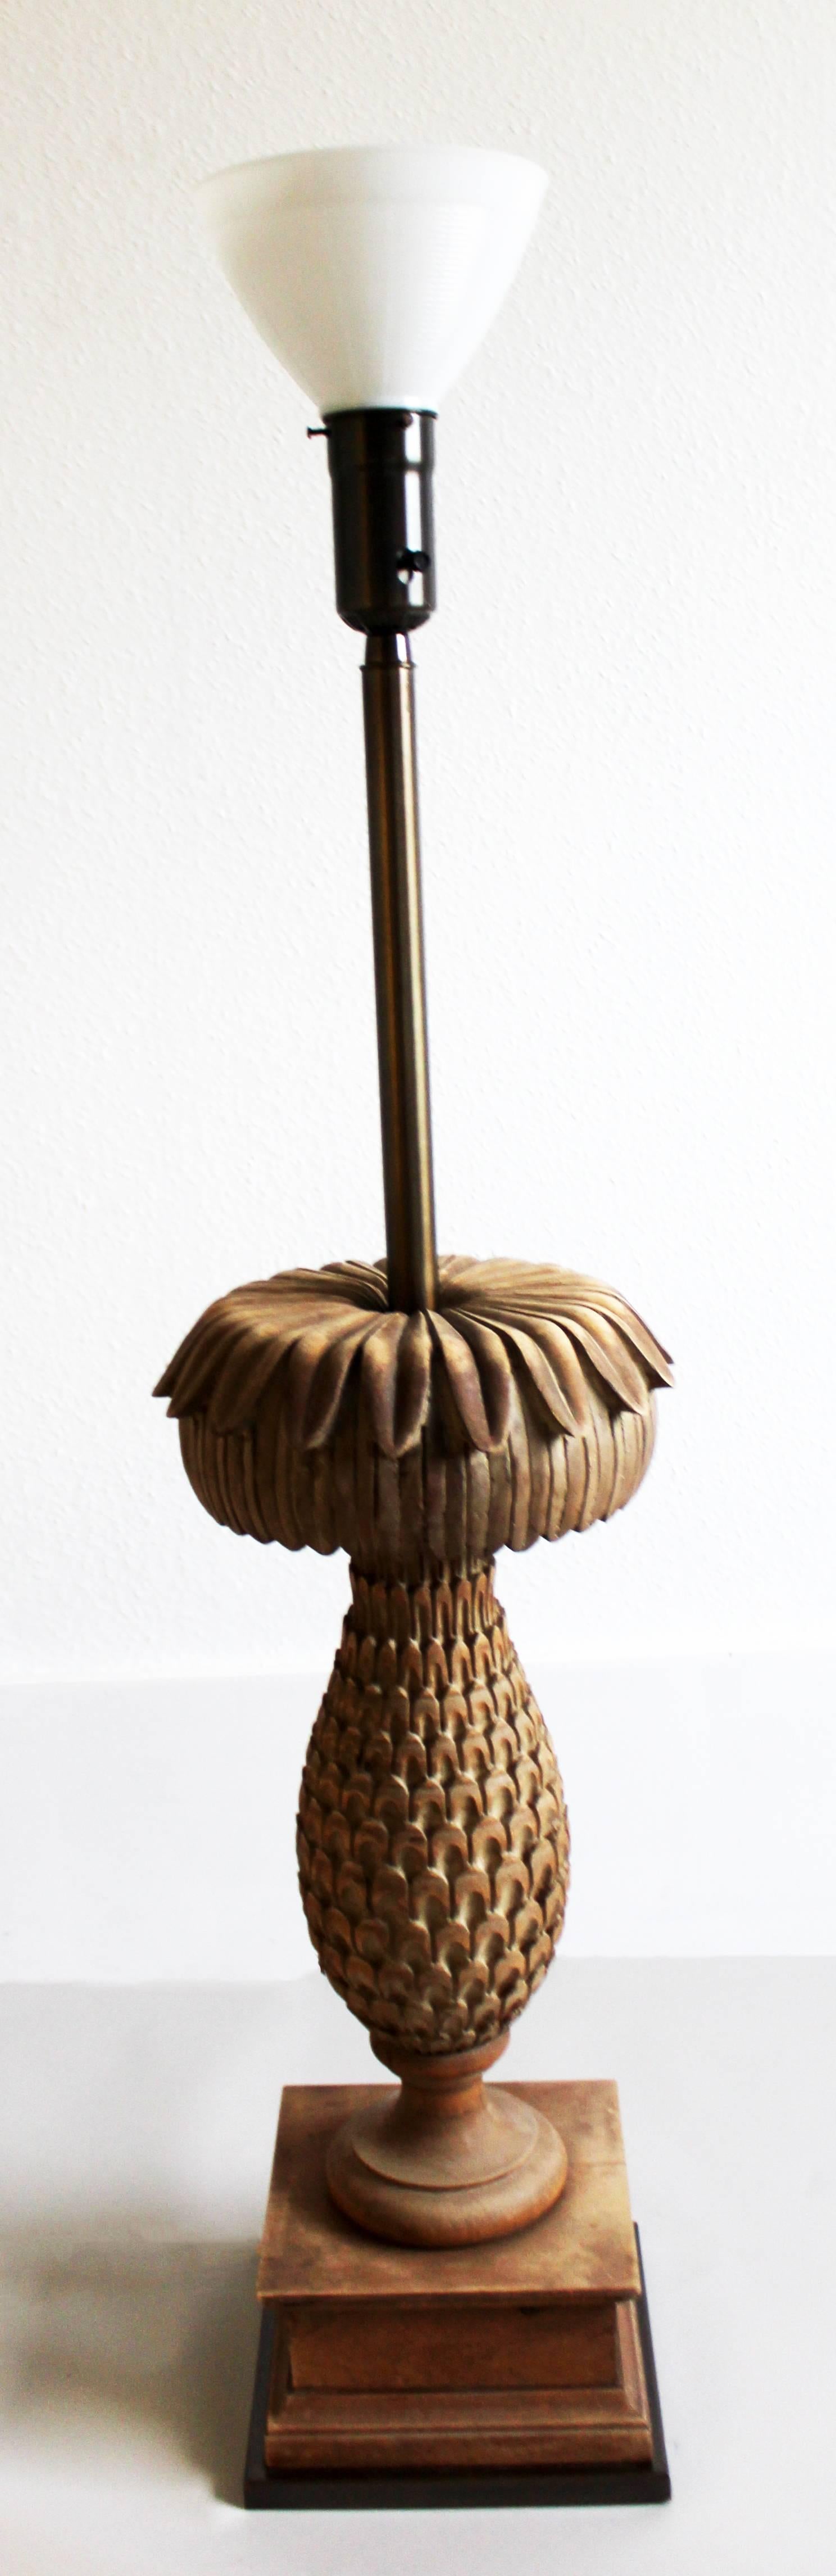 American Mid-Century Modern Marbro Pineapple Carved Wood Table Floor Lamp Original Shade